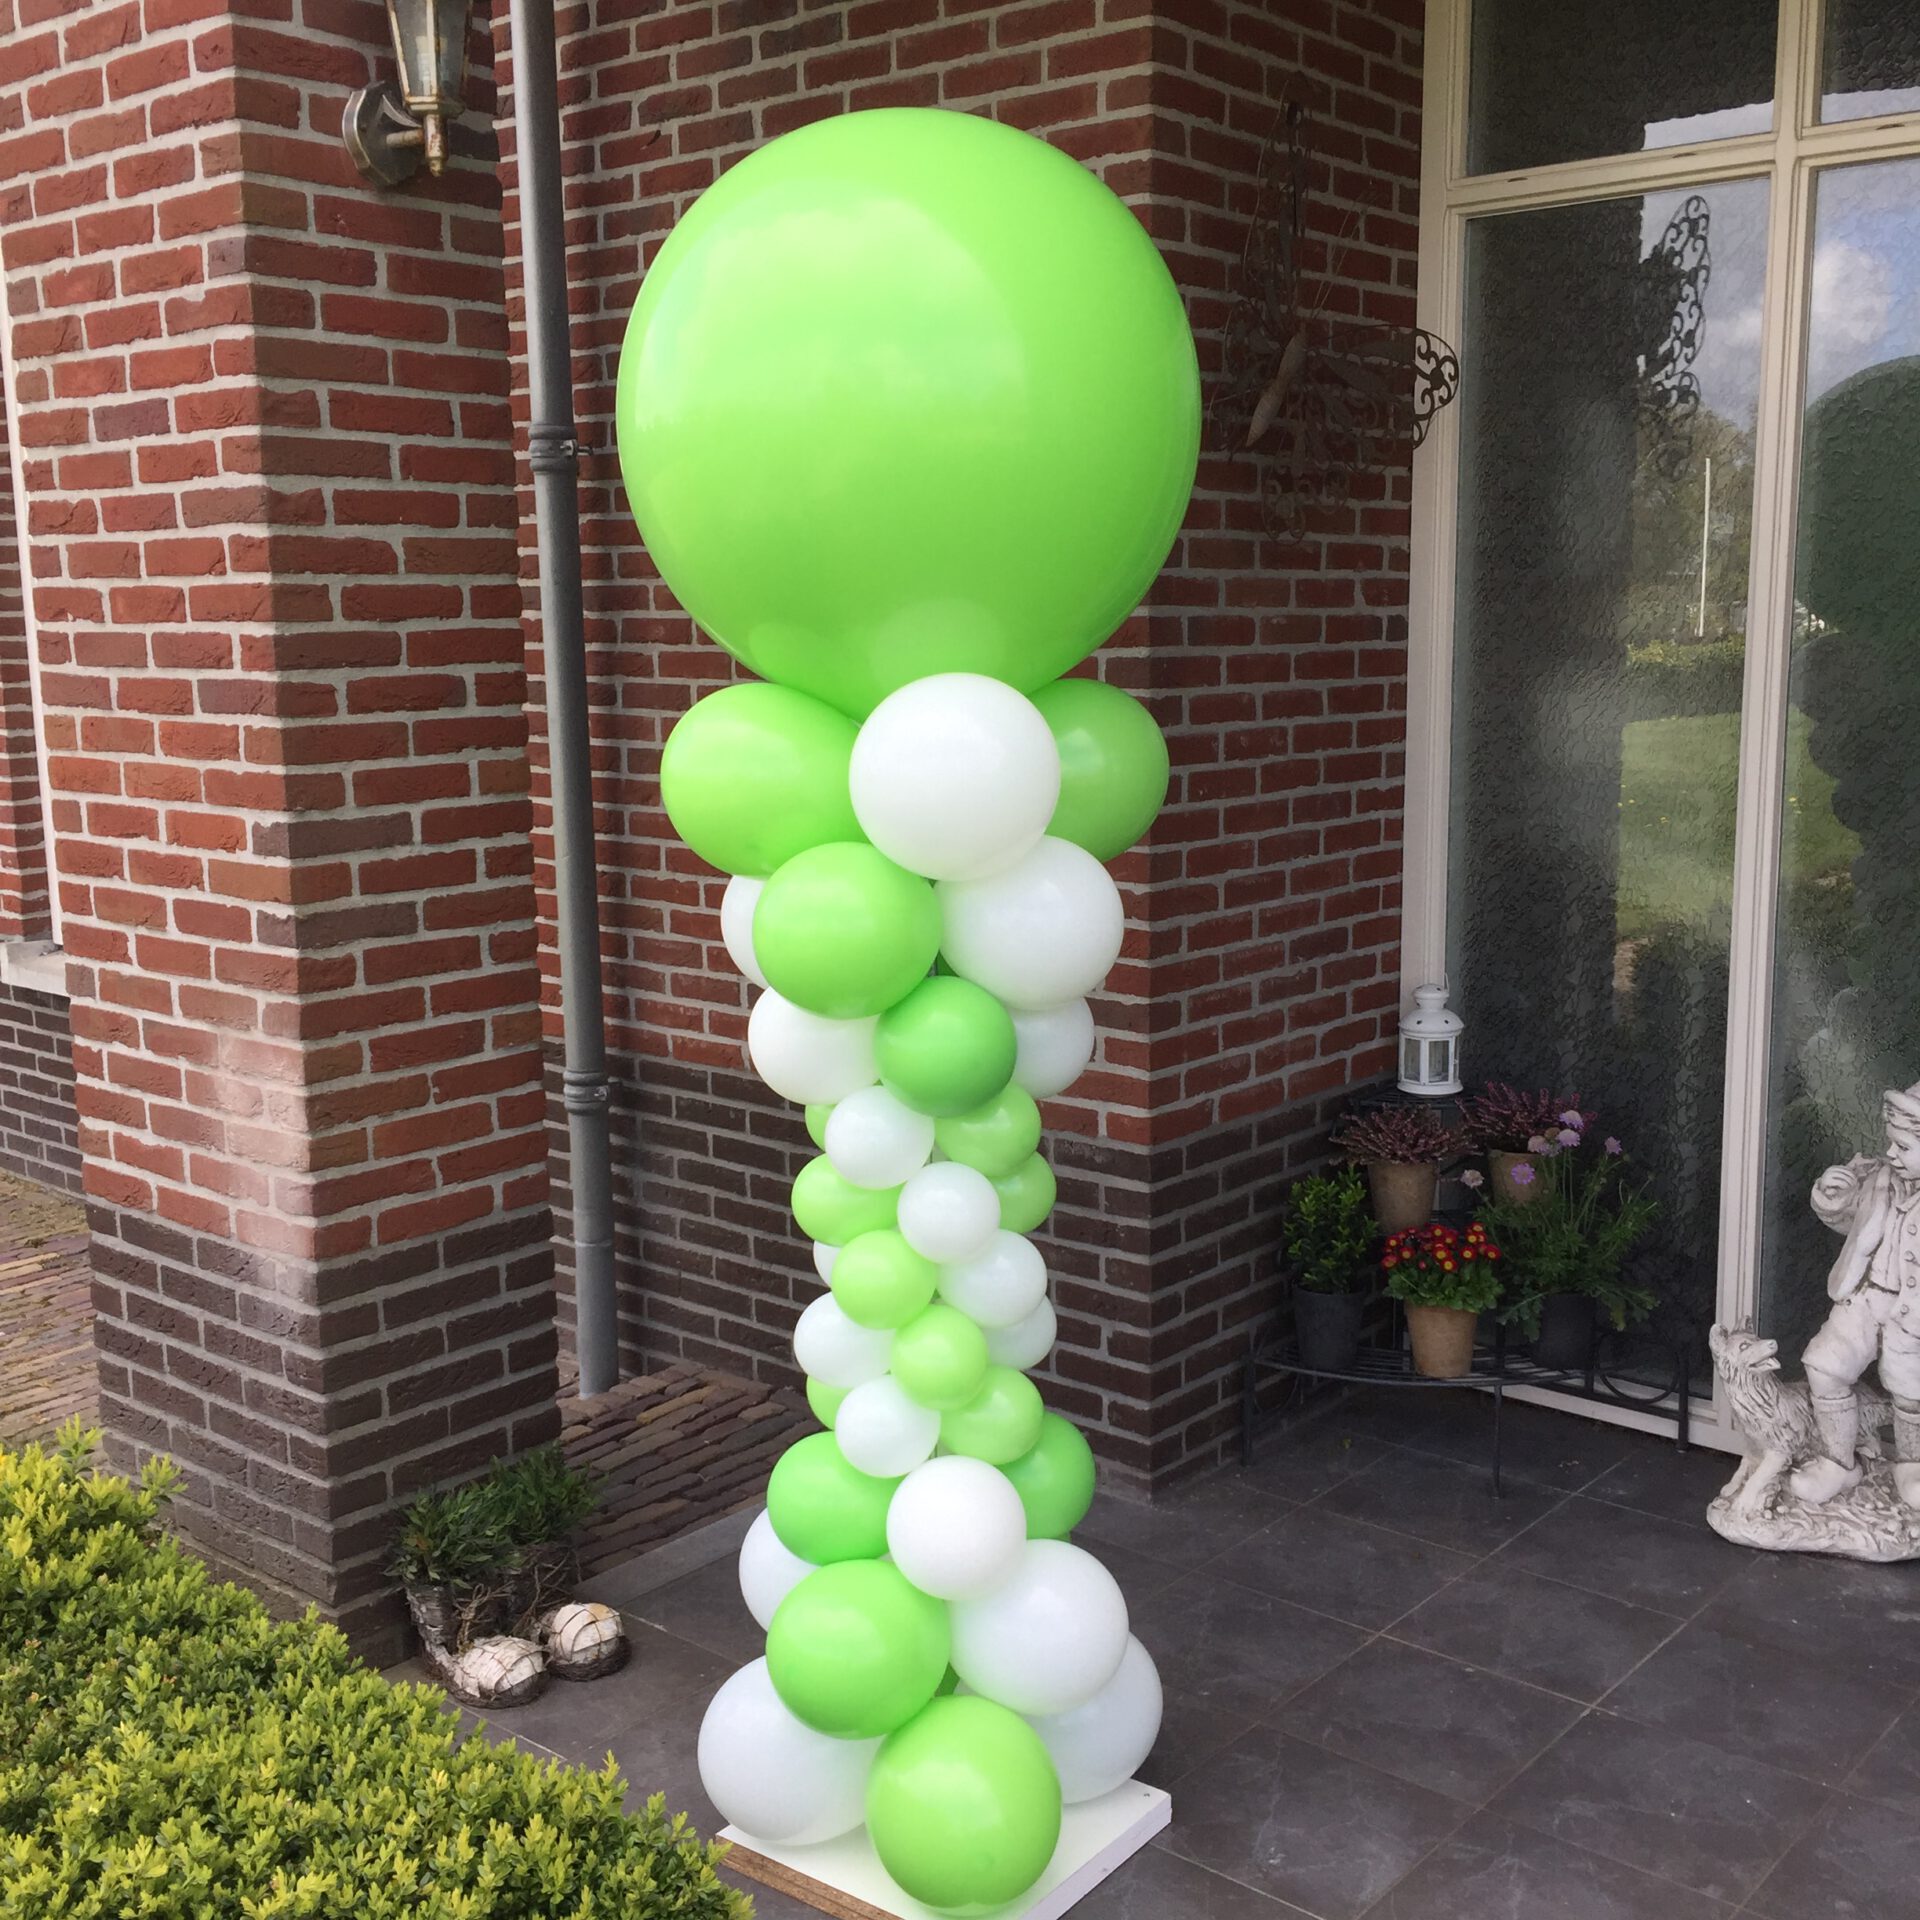 Lokken hiërarchie Versterken Standaard ballonnenpilaar (4) - Feesthuis